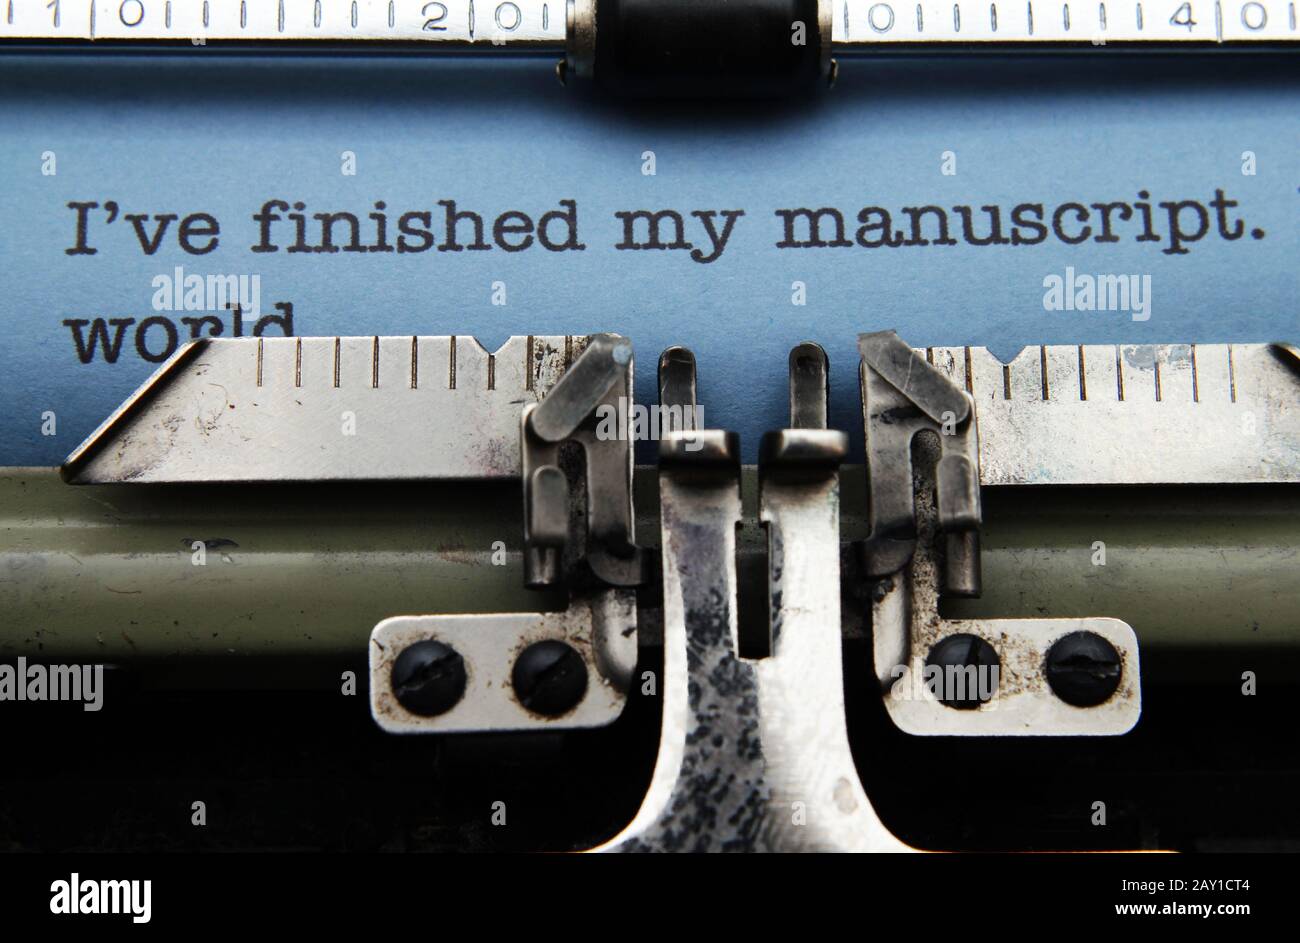 Manuscript on typewriter machine Stock Photo